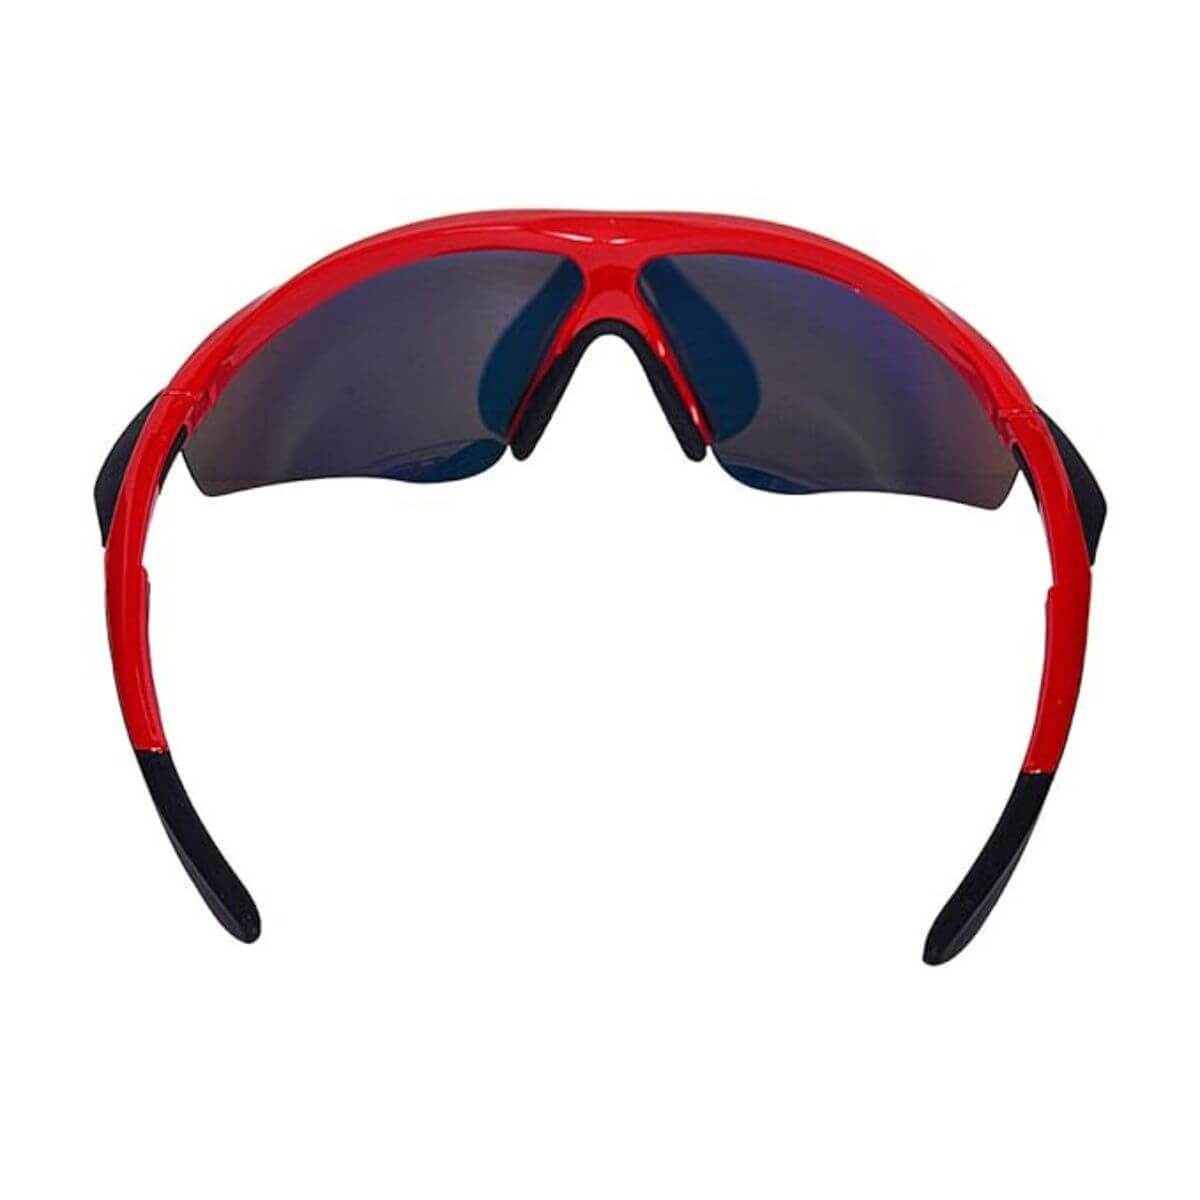 HINDSIGHT Oversized Brow Bar Sunglasses | Quay Australia